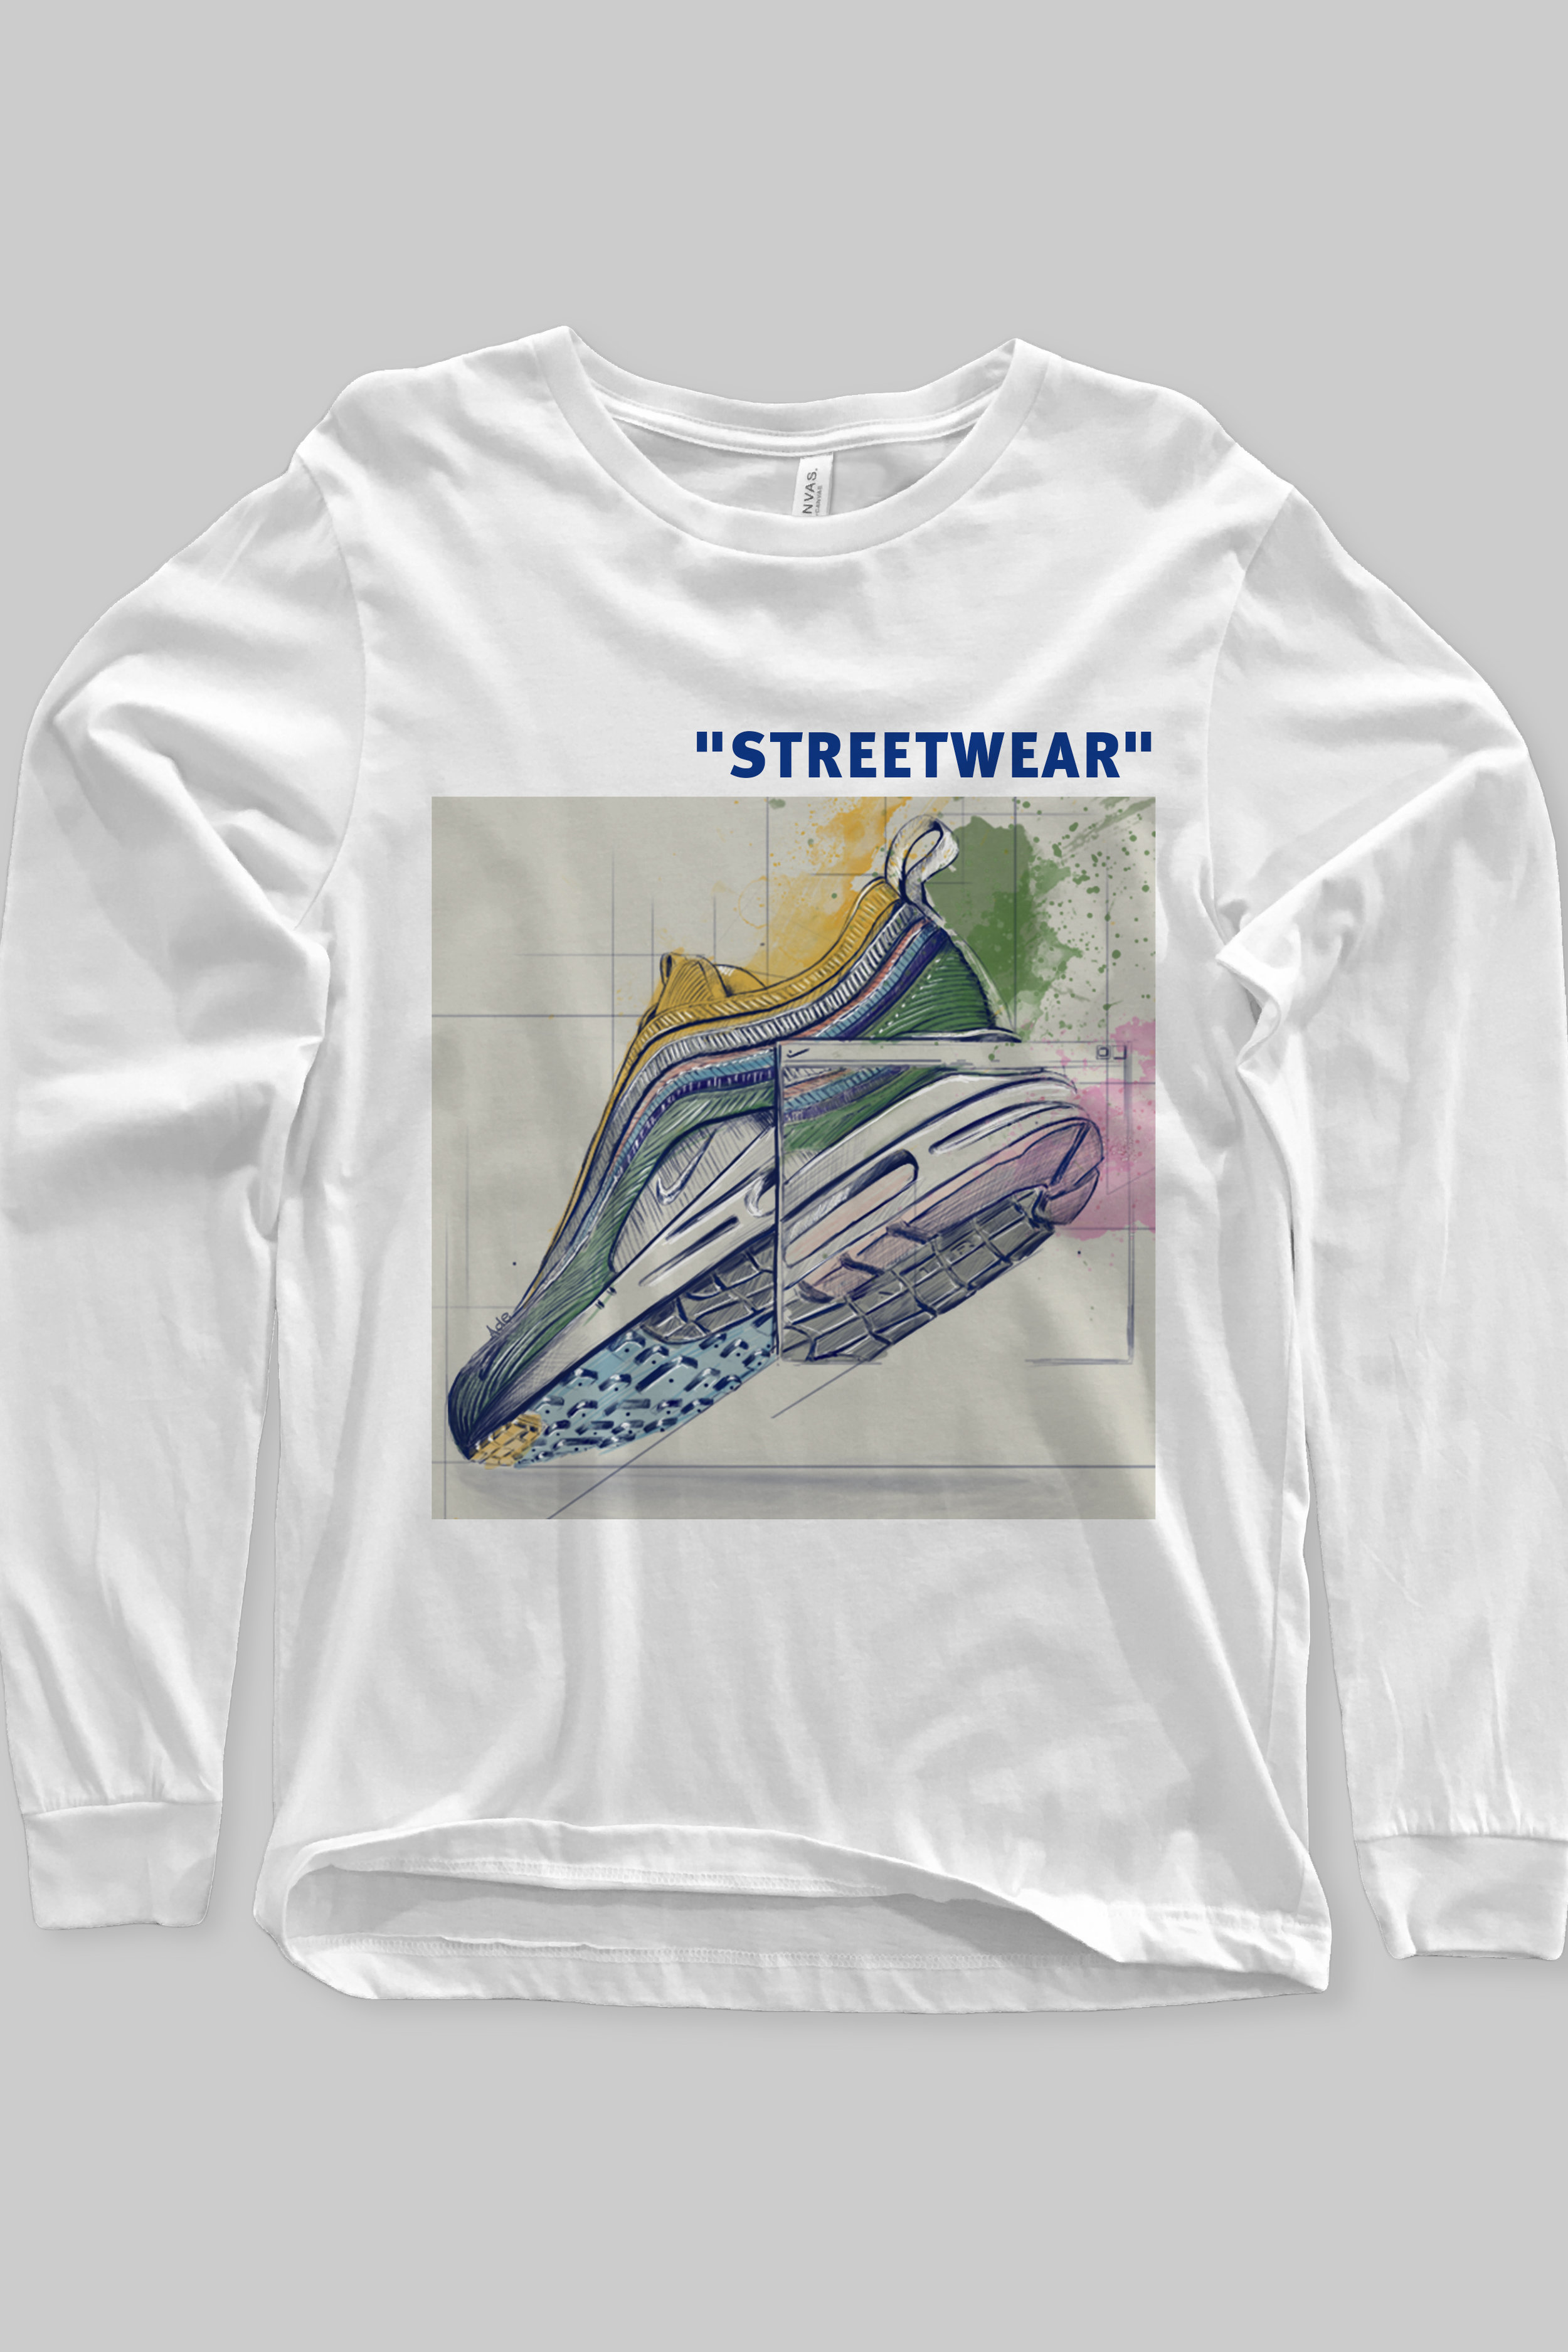 nike streetwear shirts